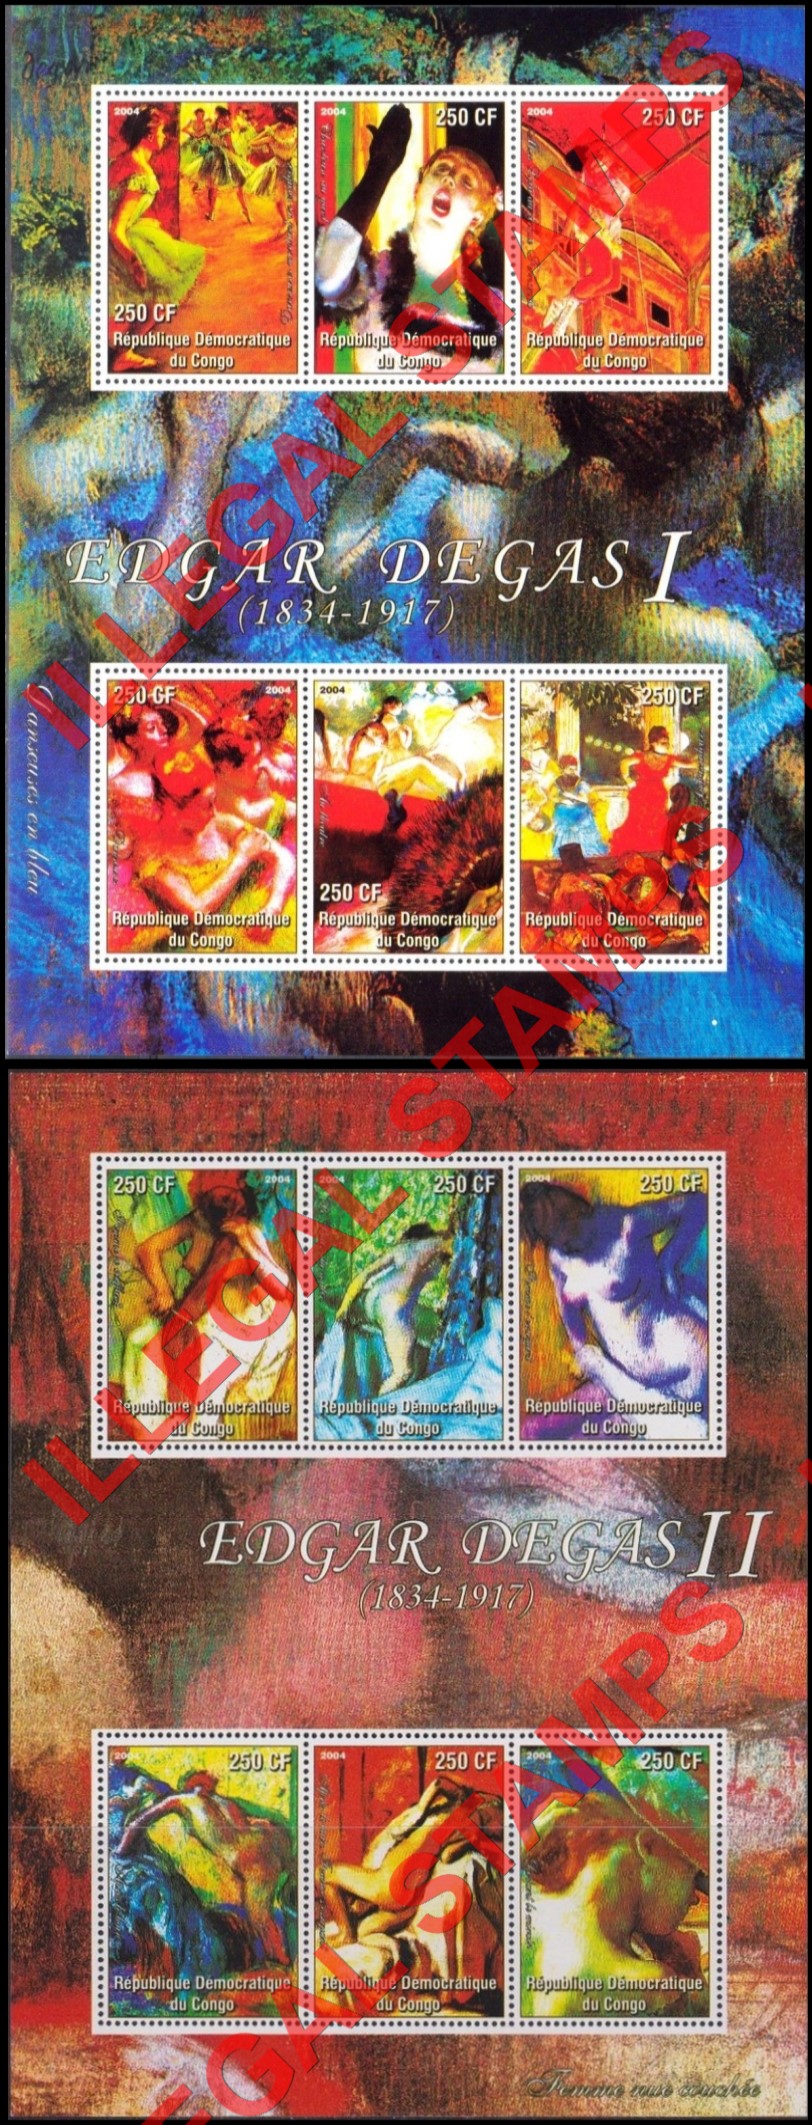 Congo Democratic Republic 2004 Paintings Edgar Degas Illegal Stamp Souvenir Sheets of 6